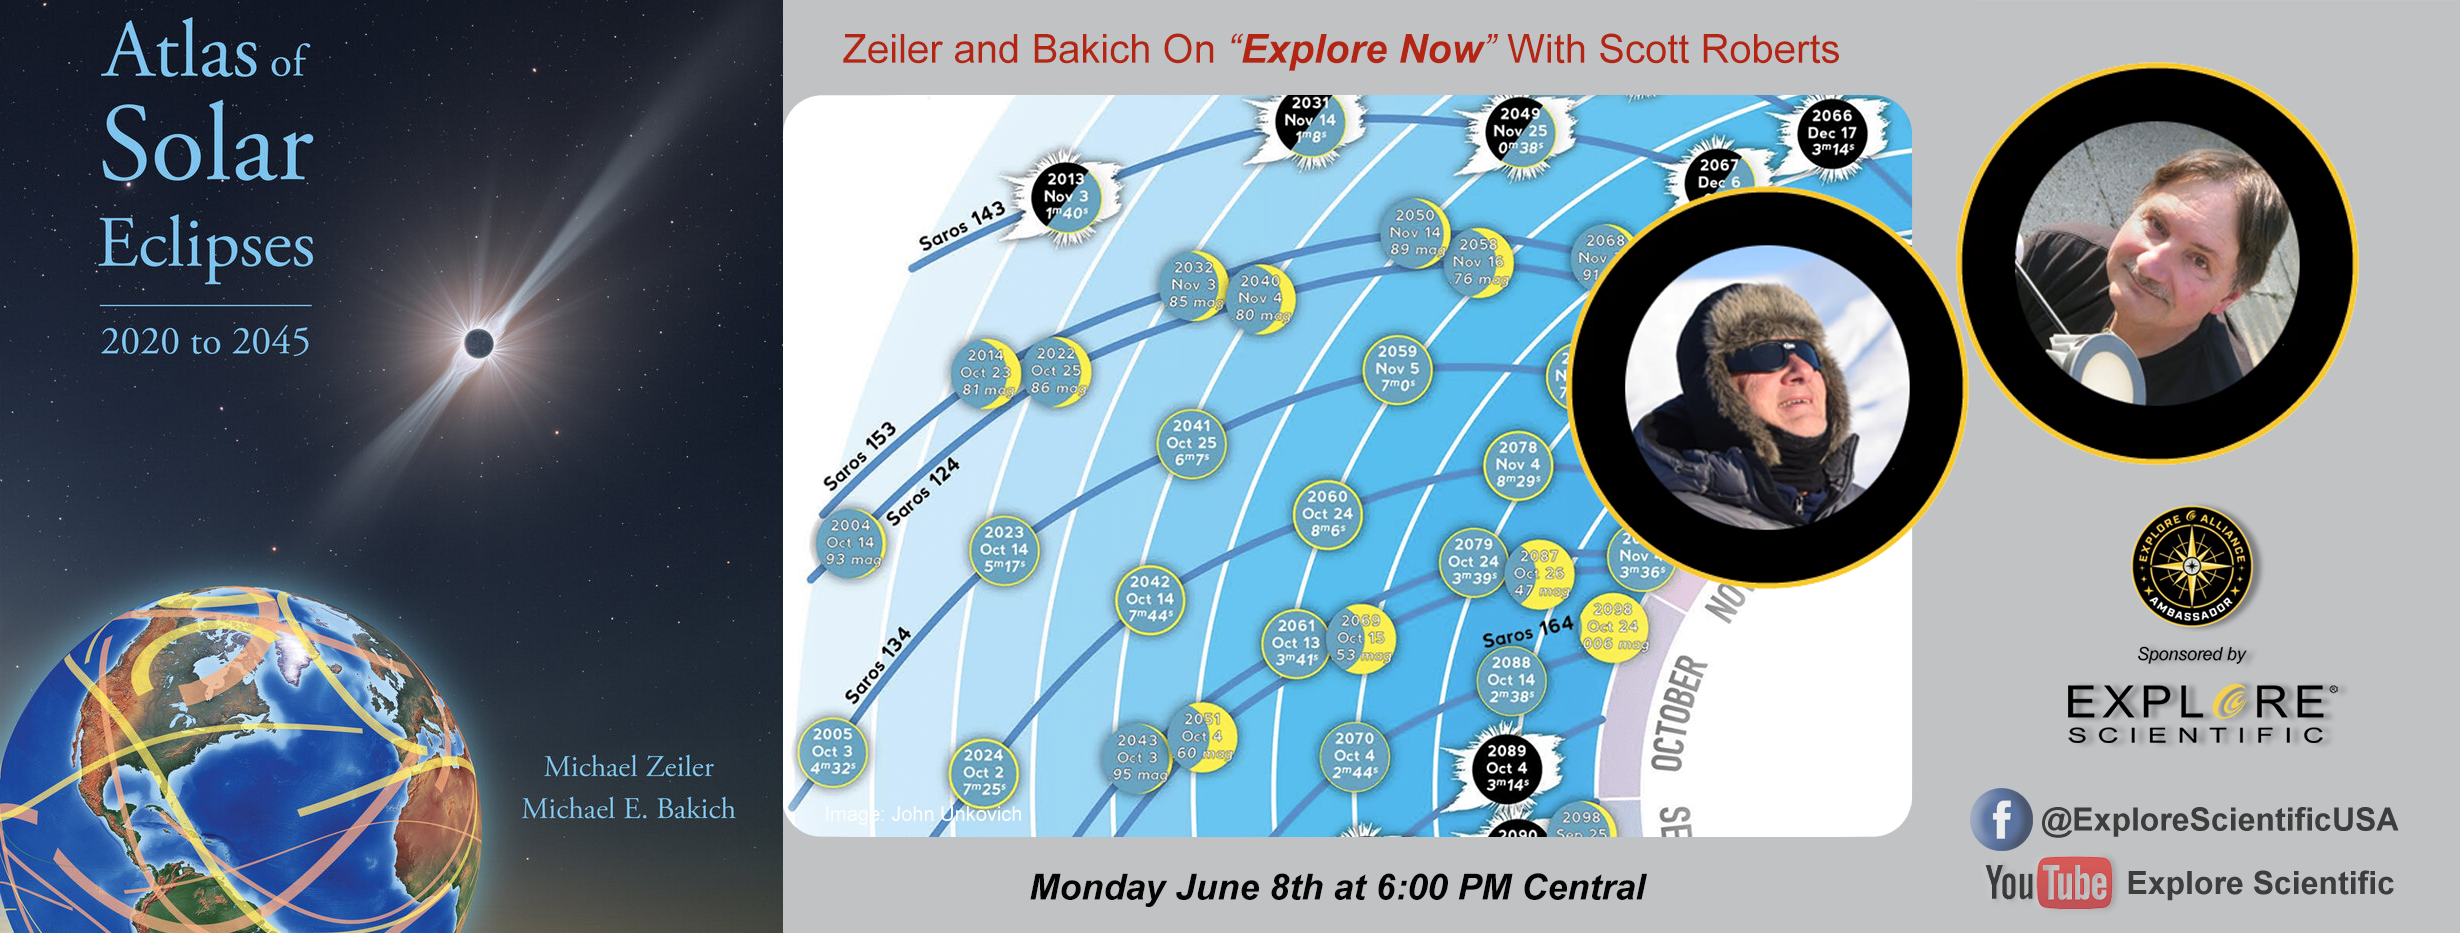 Atlas of Solar Eclipses 2020 - 2045 on Explore Now!